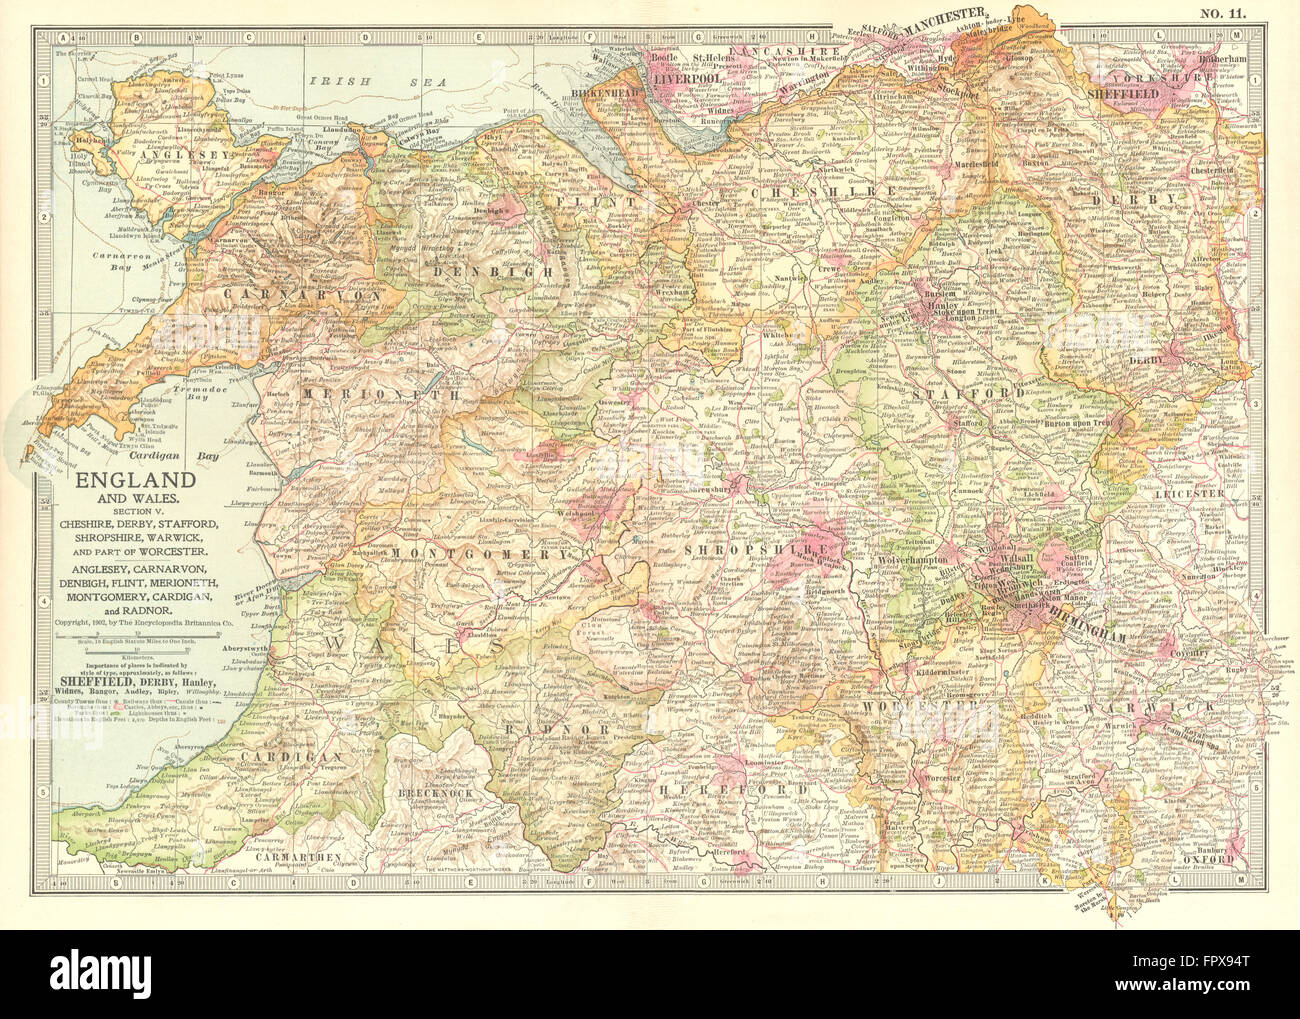 UK: West Midlands England & North Wales, 1903 antique map Stock Photo